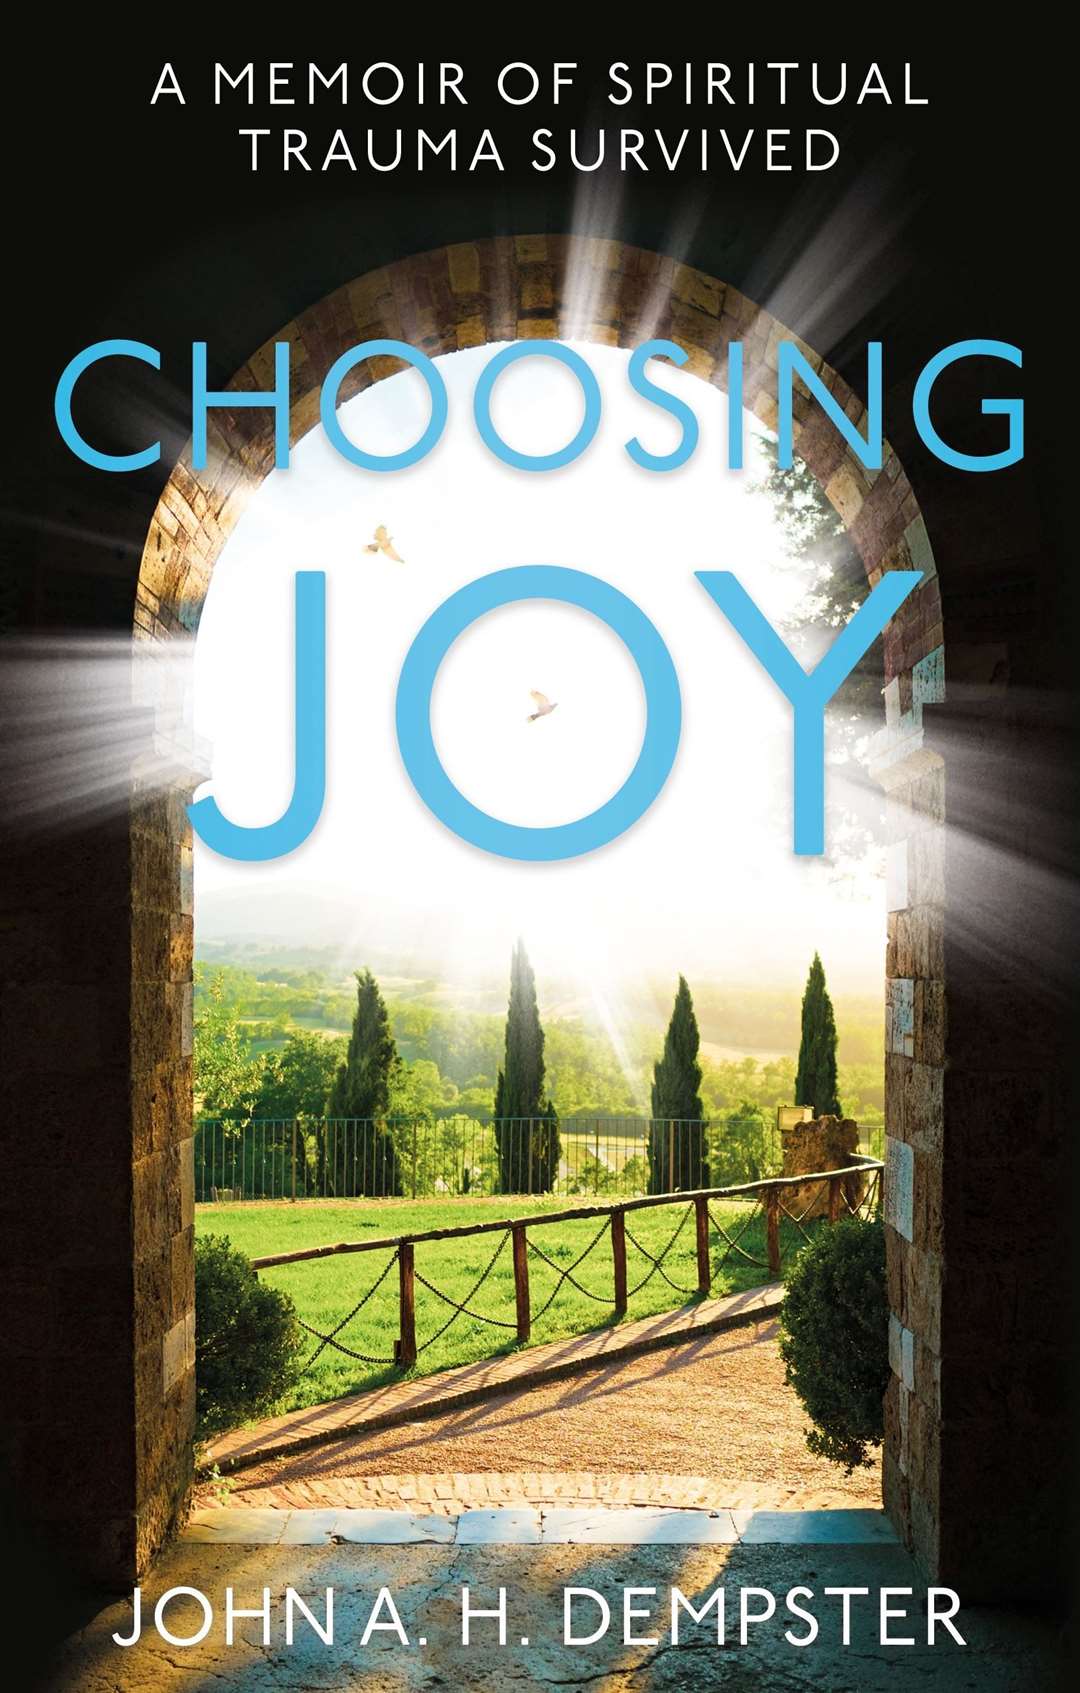 The cover of John's new book, Choosing Joy.